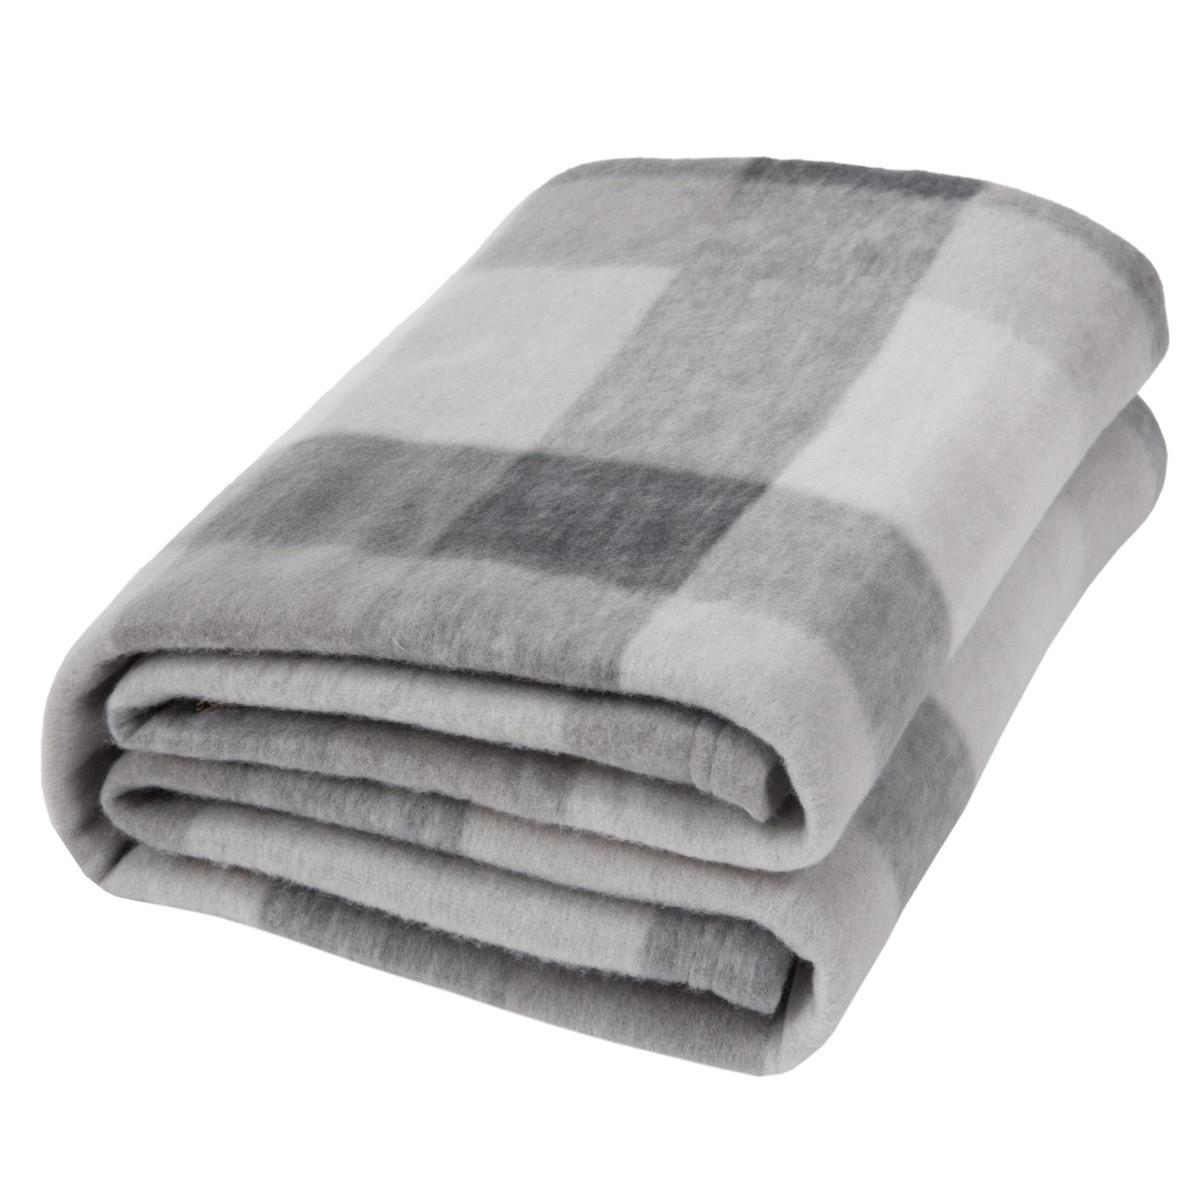 Dreamscene Tartan Fleece Throw, 60 x 70 inches - Grey>